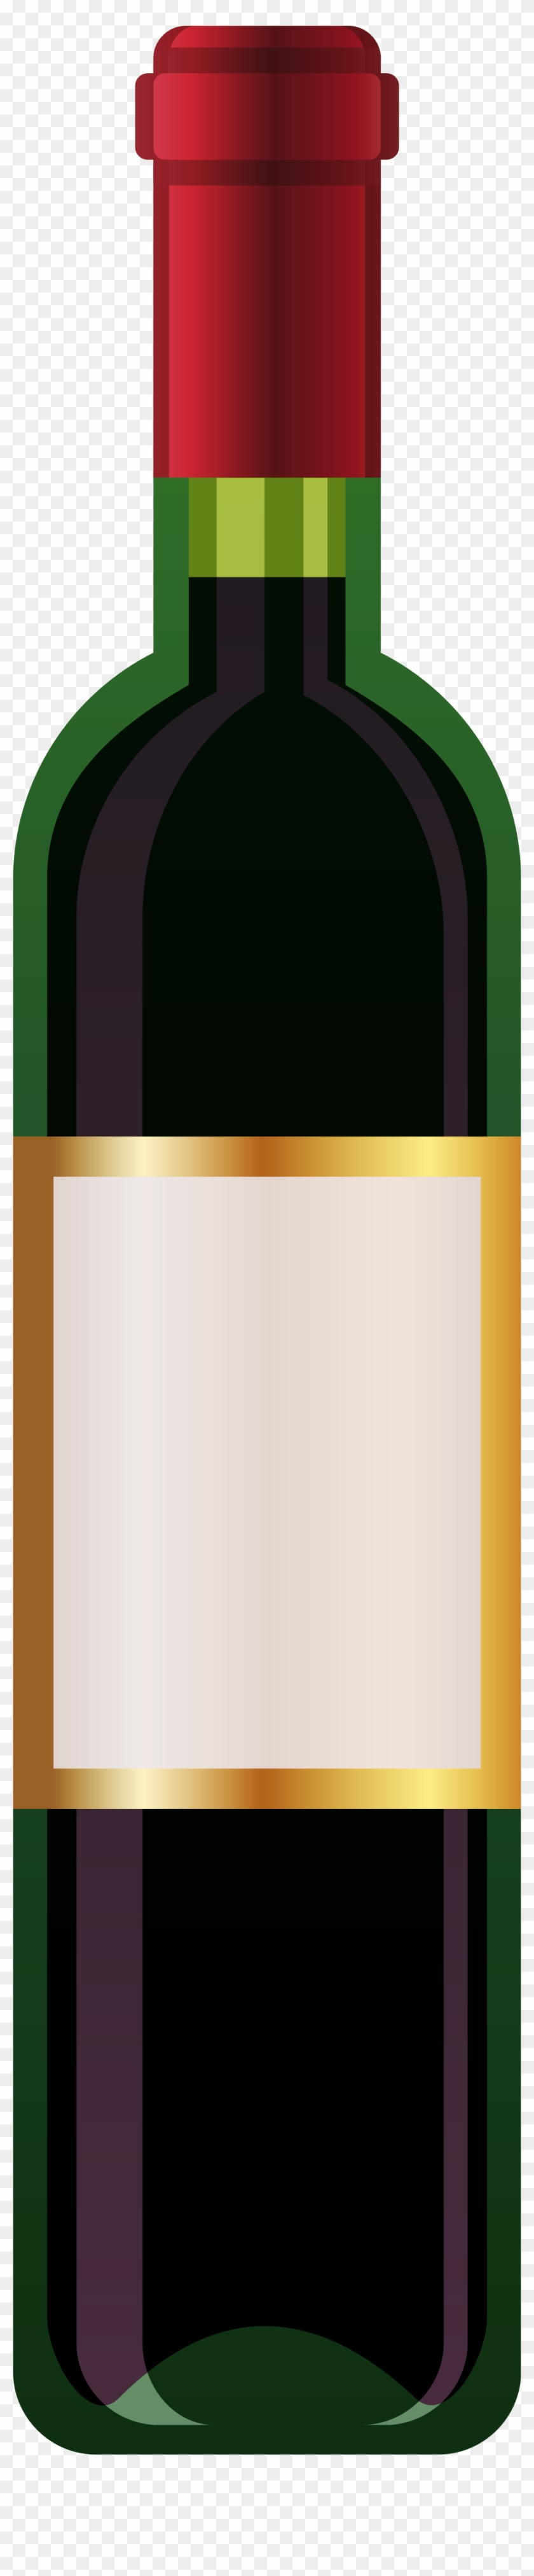 Bottle Of Wine Clipart - Wine Cooler #391305